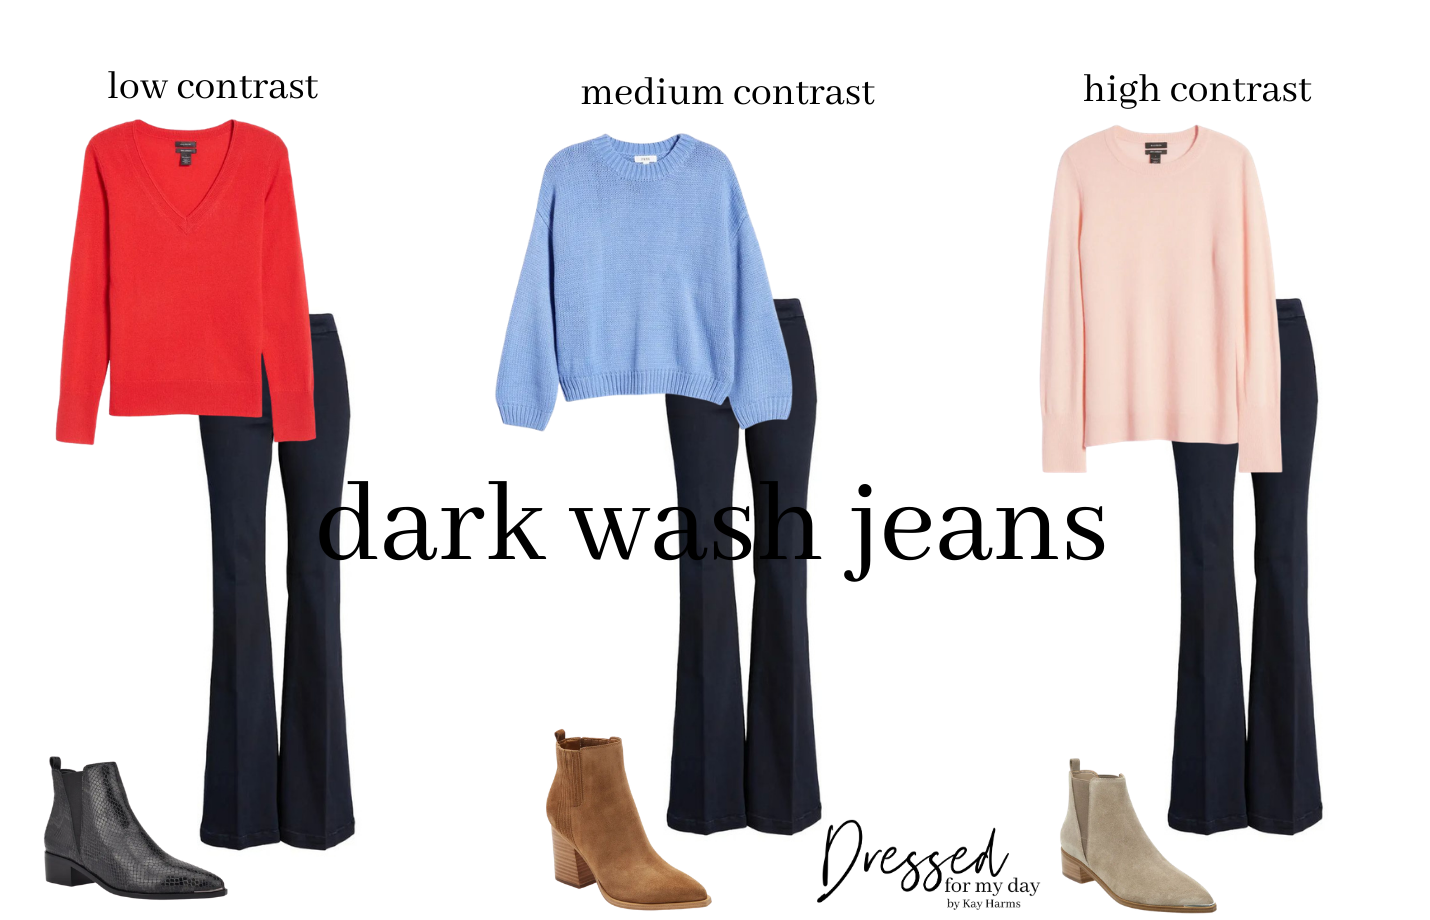 dark wash jeans contrast